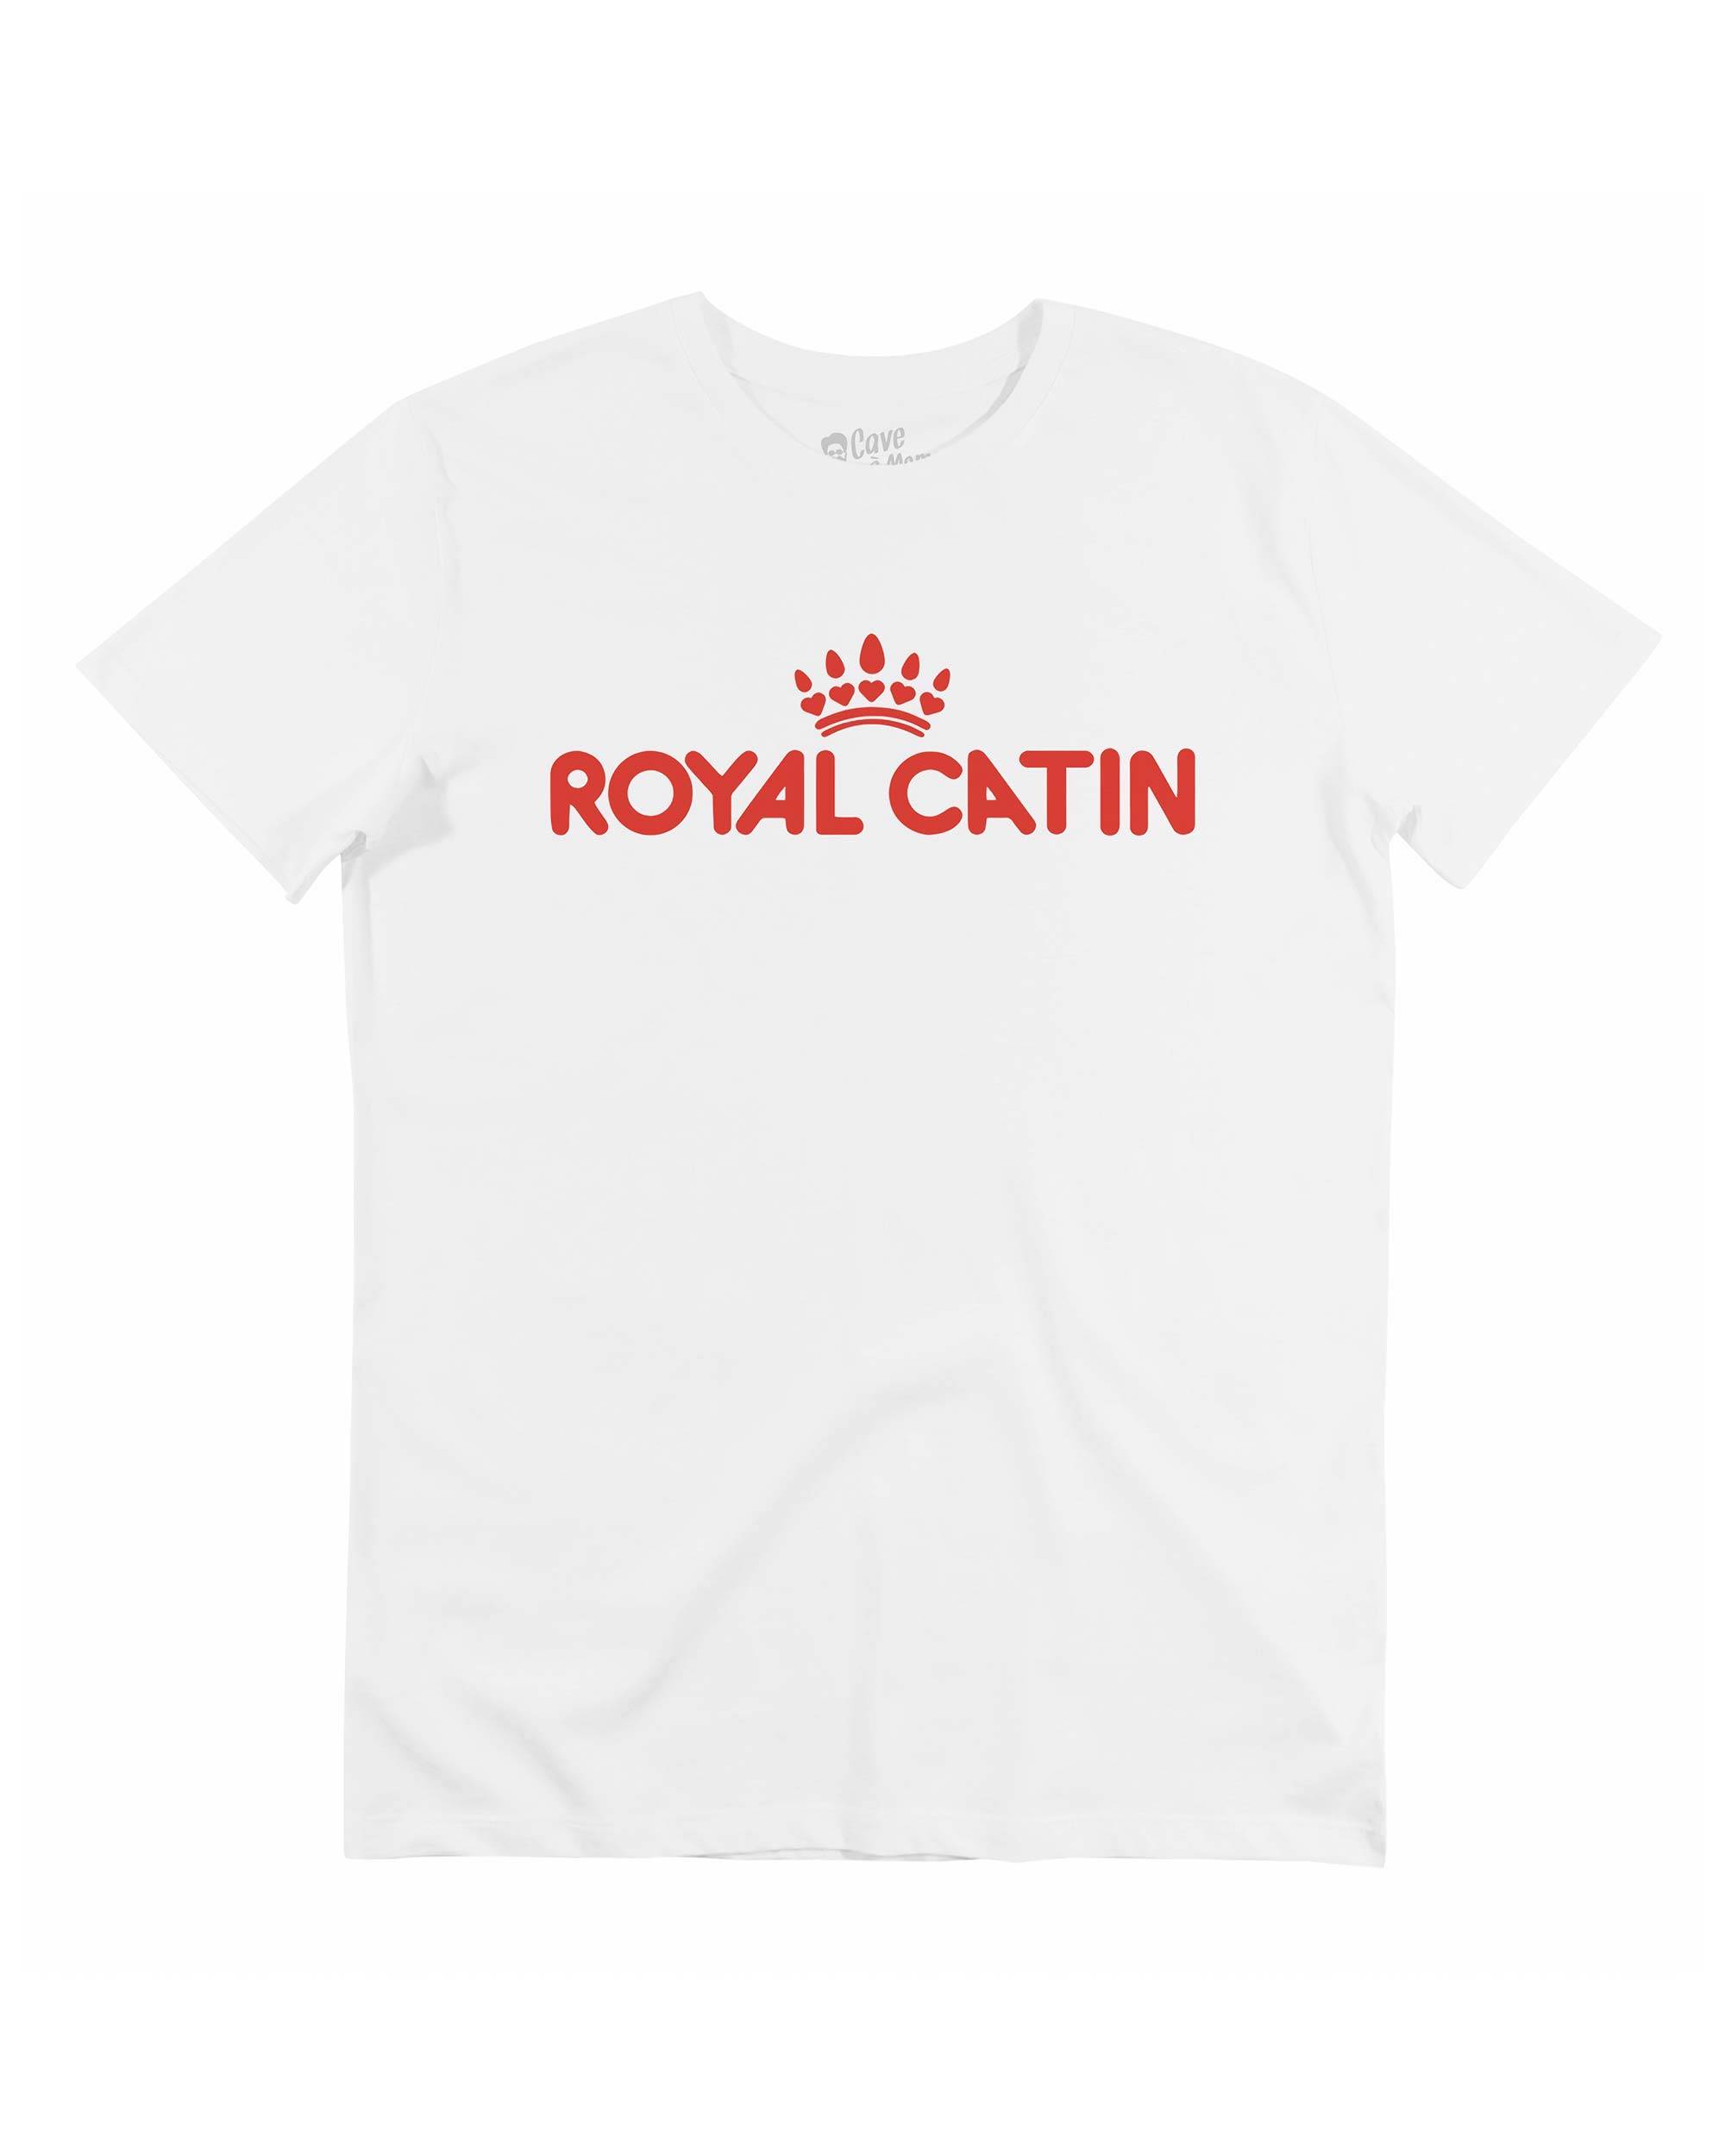 T-shirt Royal Catin Grafitee